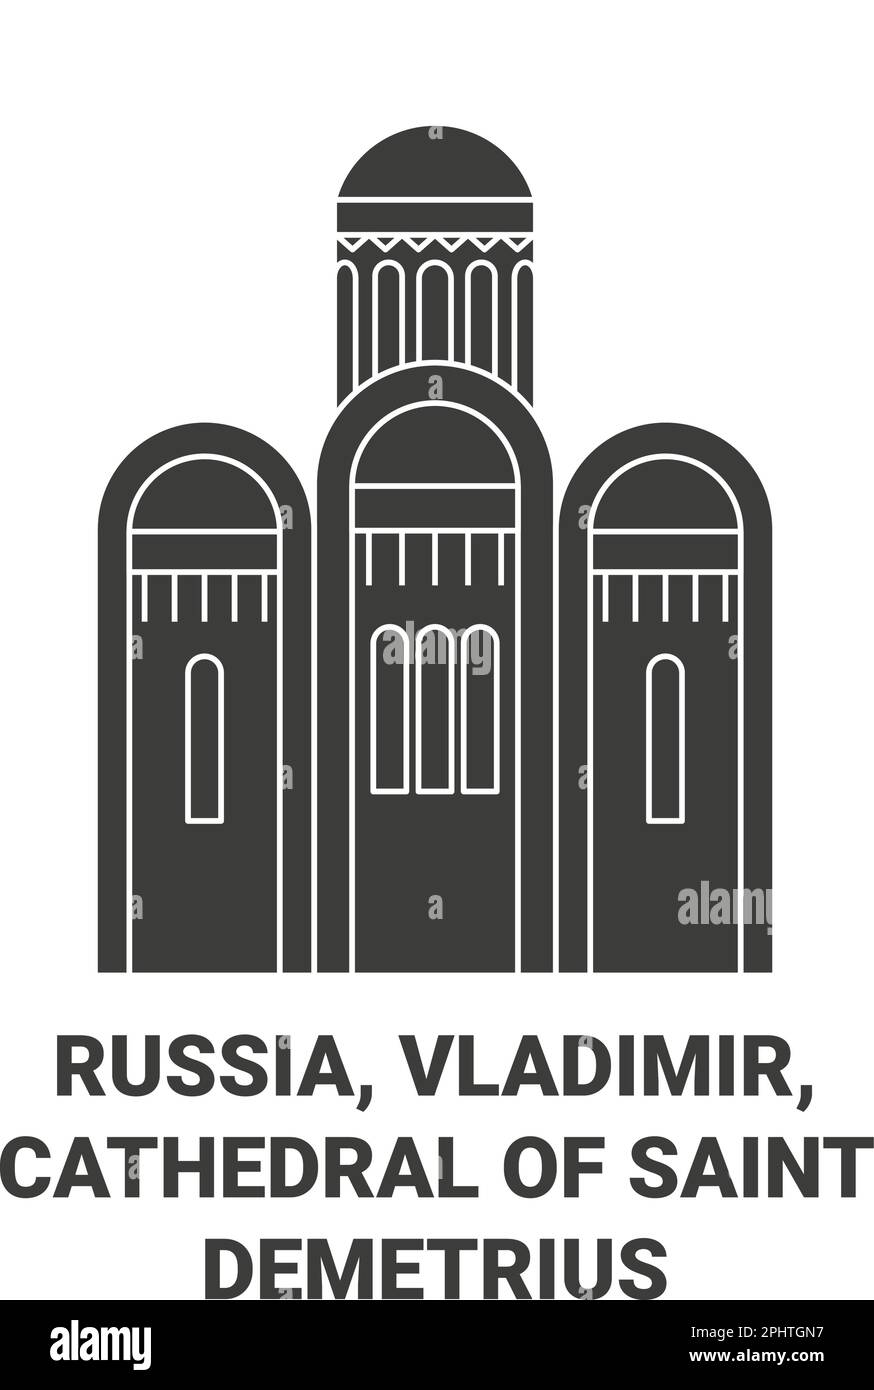 Russia, Vladimir, Cathedral Of Saint Demetrius travel landmark vector illustration Stock Vector